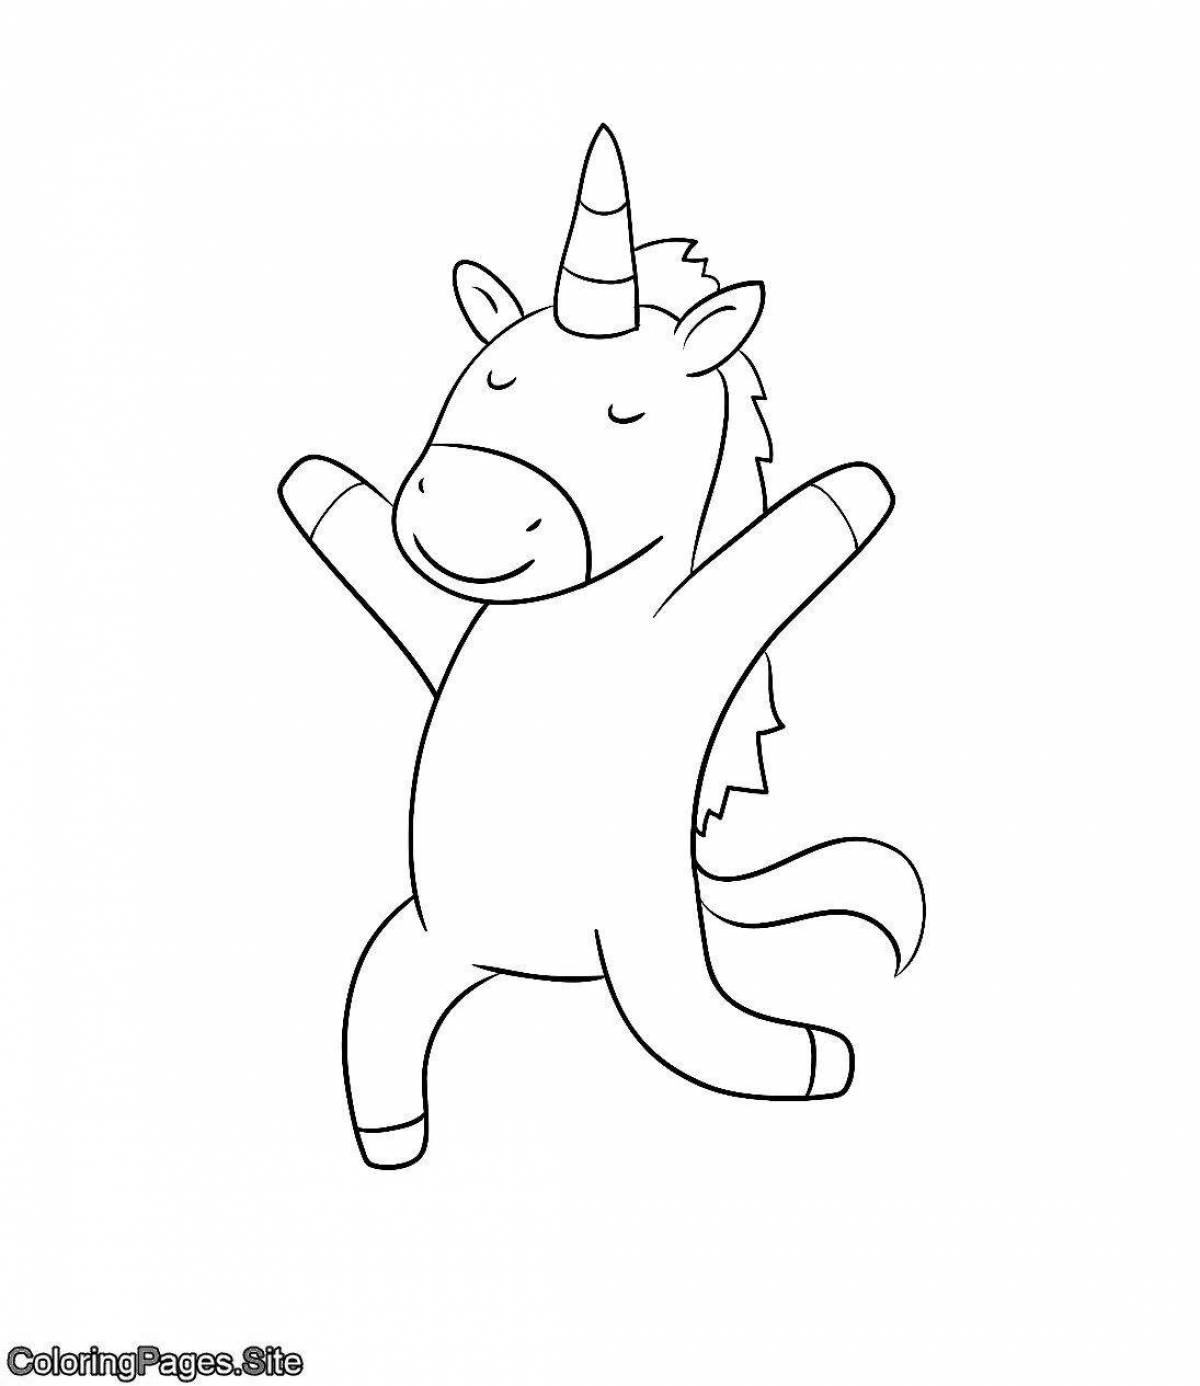 Vivacious coloring page simple unicorn